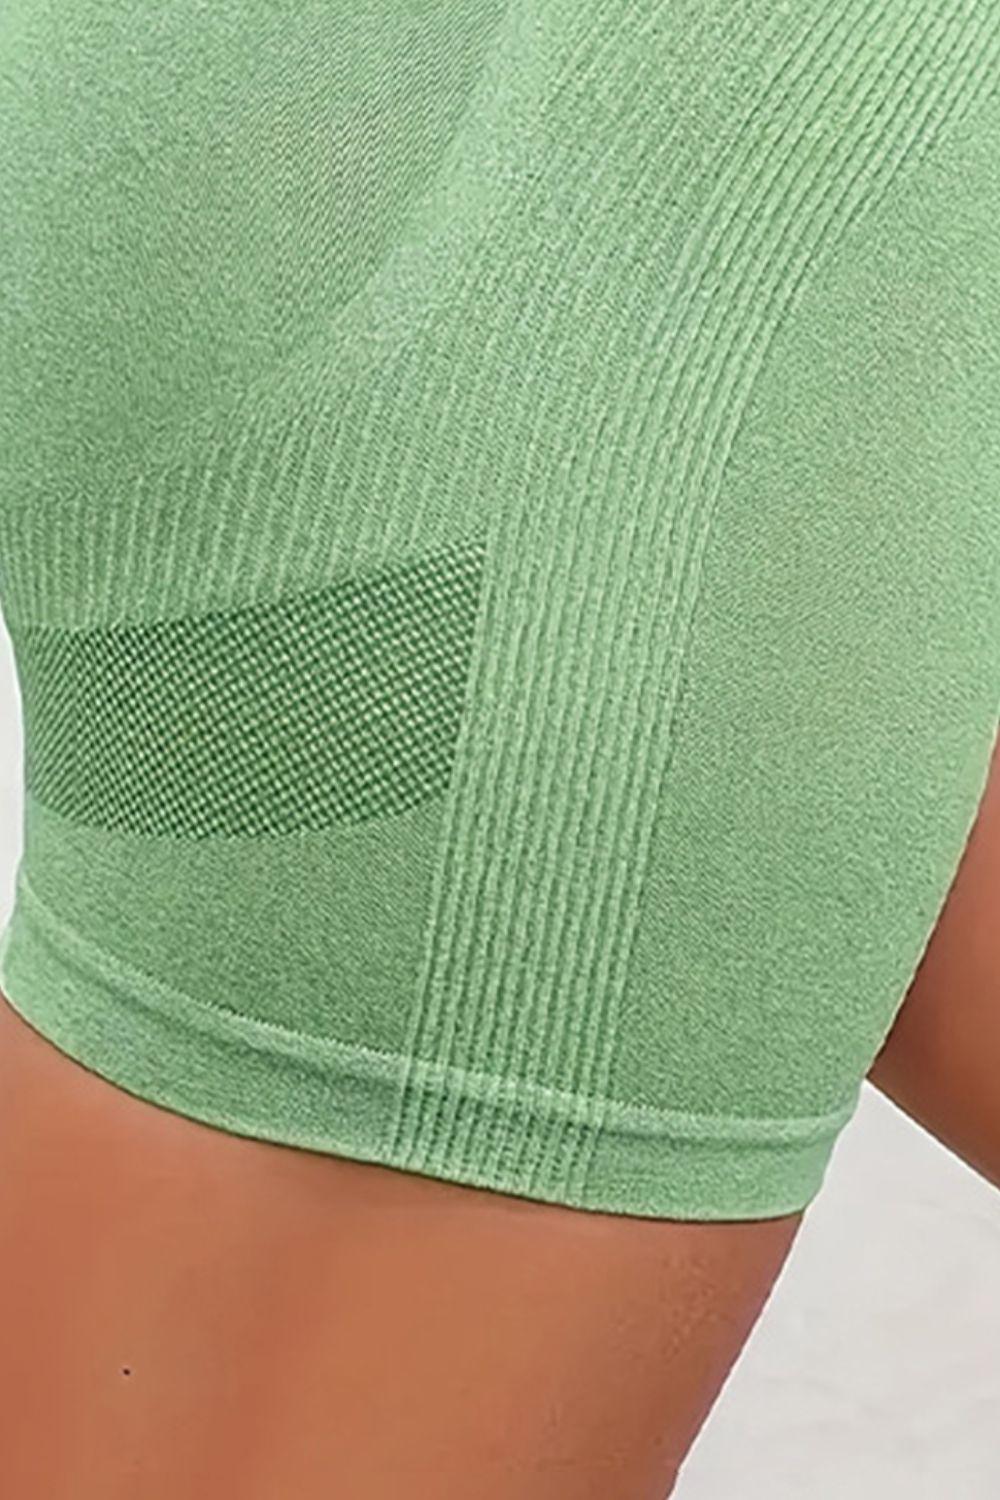 a close up of a woman's butt wearing a green sports bra